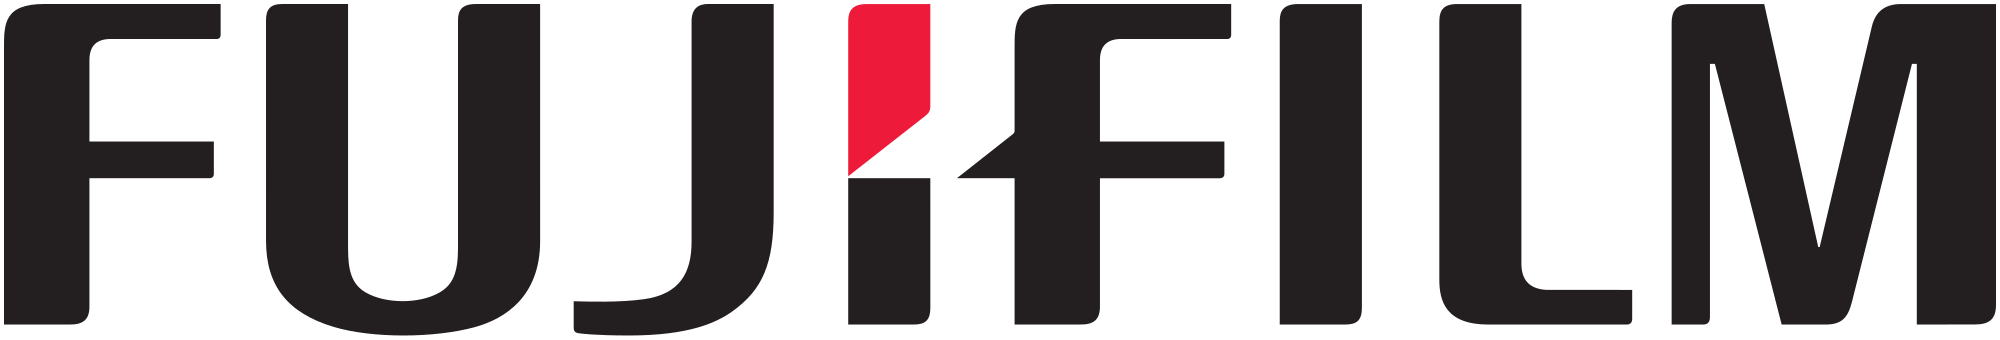 Fujifilm Logo - File:Fujifilm logo.svg - Wikimedia Commons